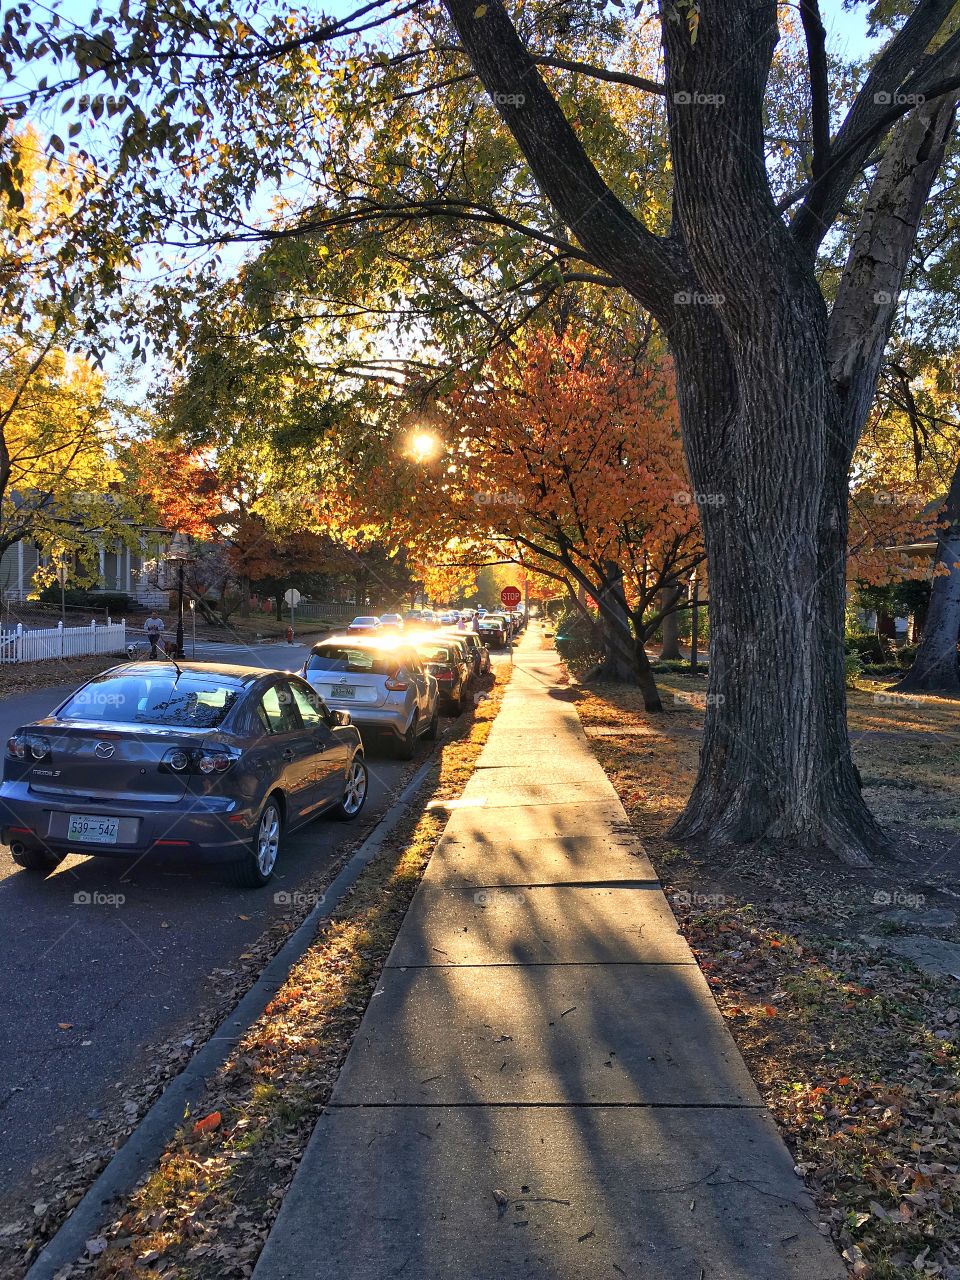 Sidewalk fall view